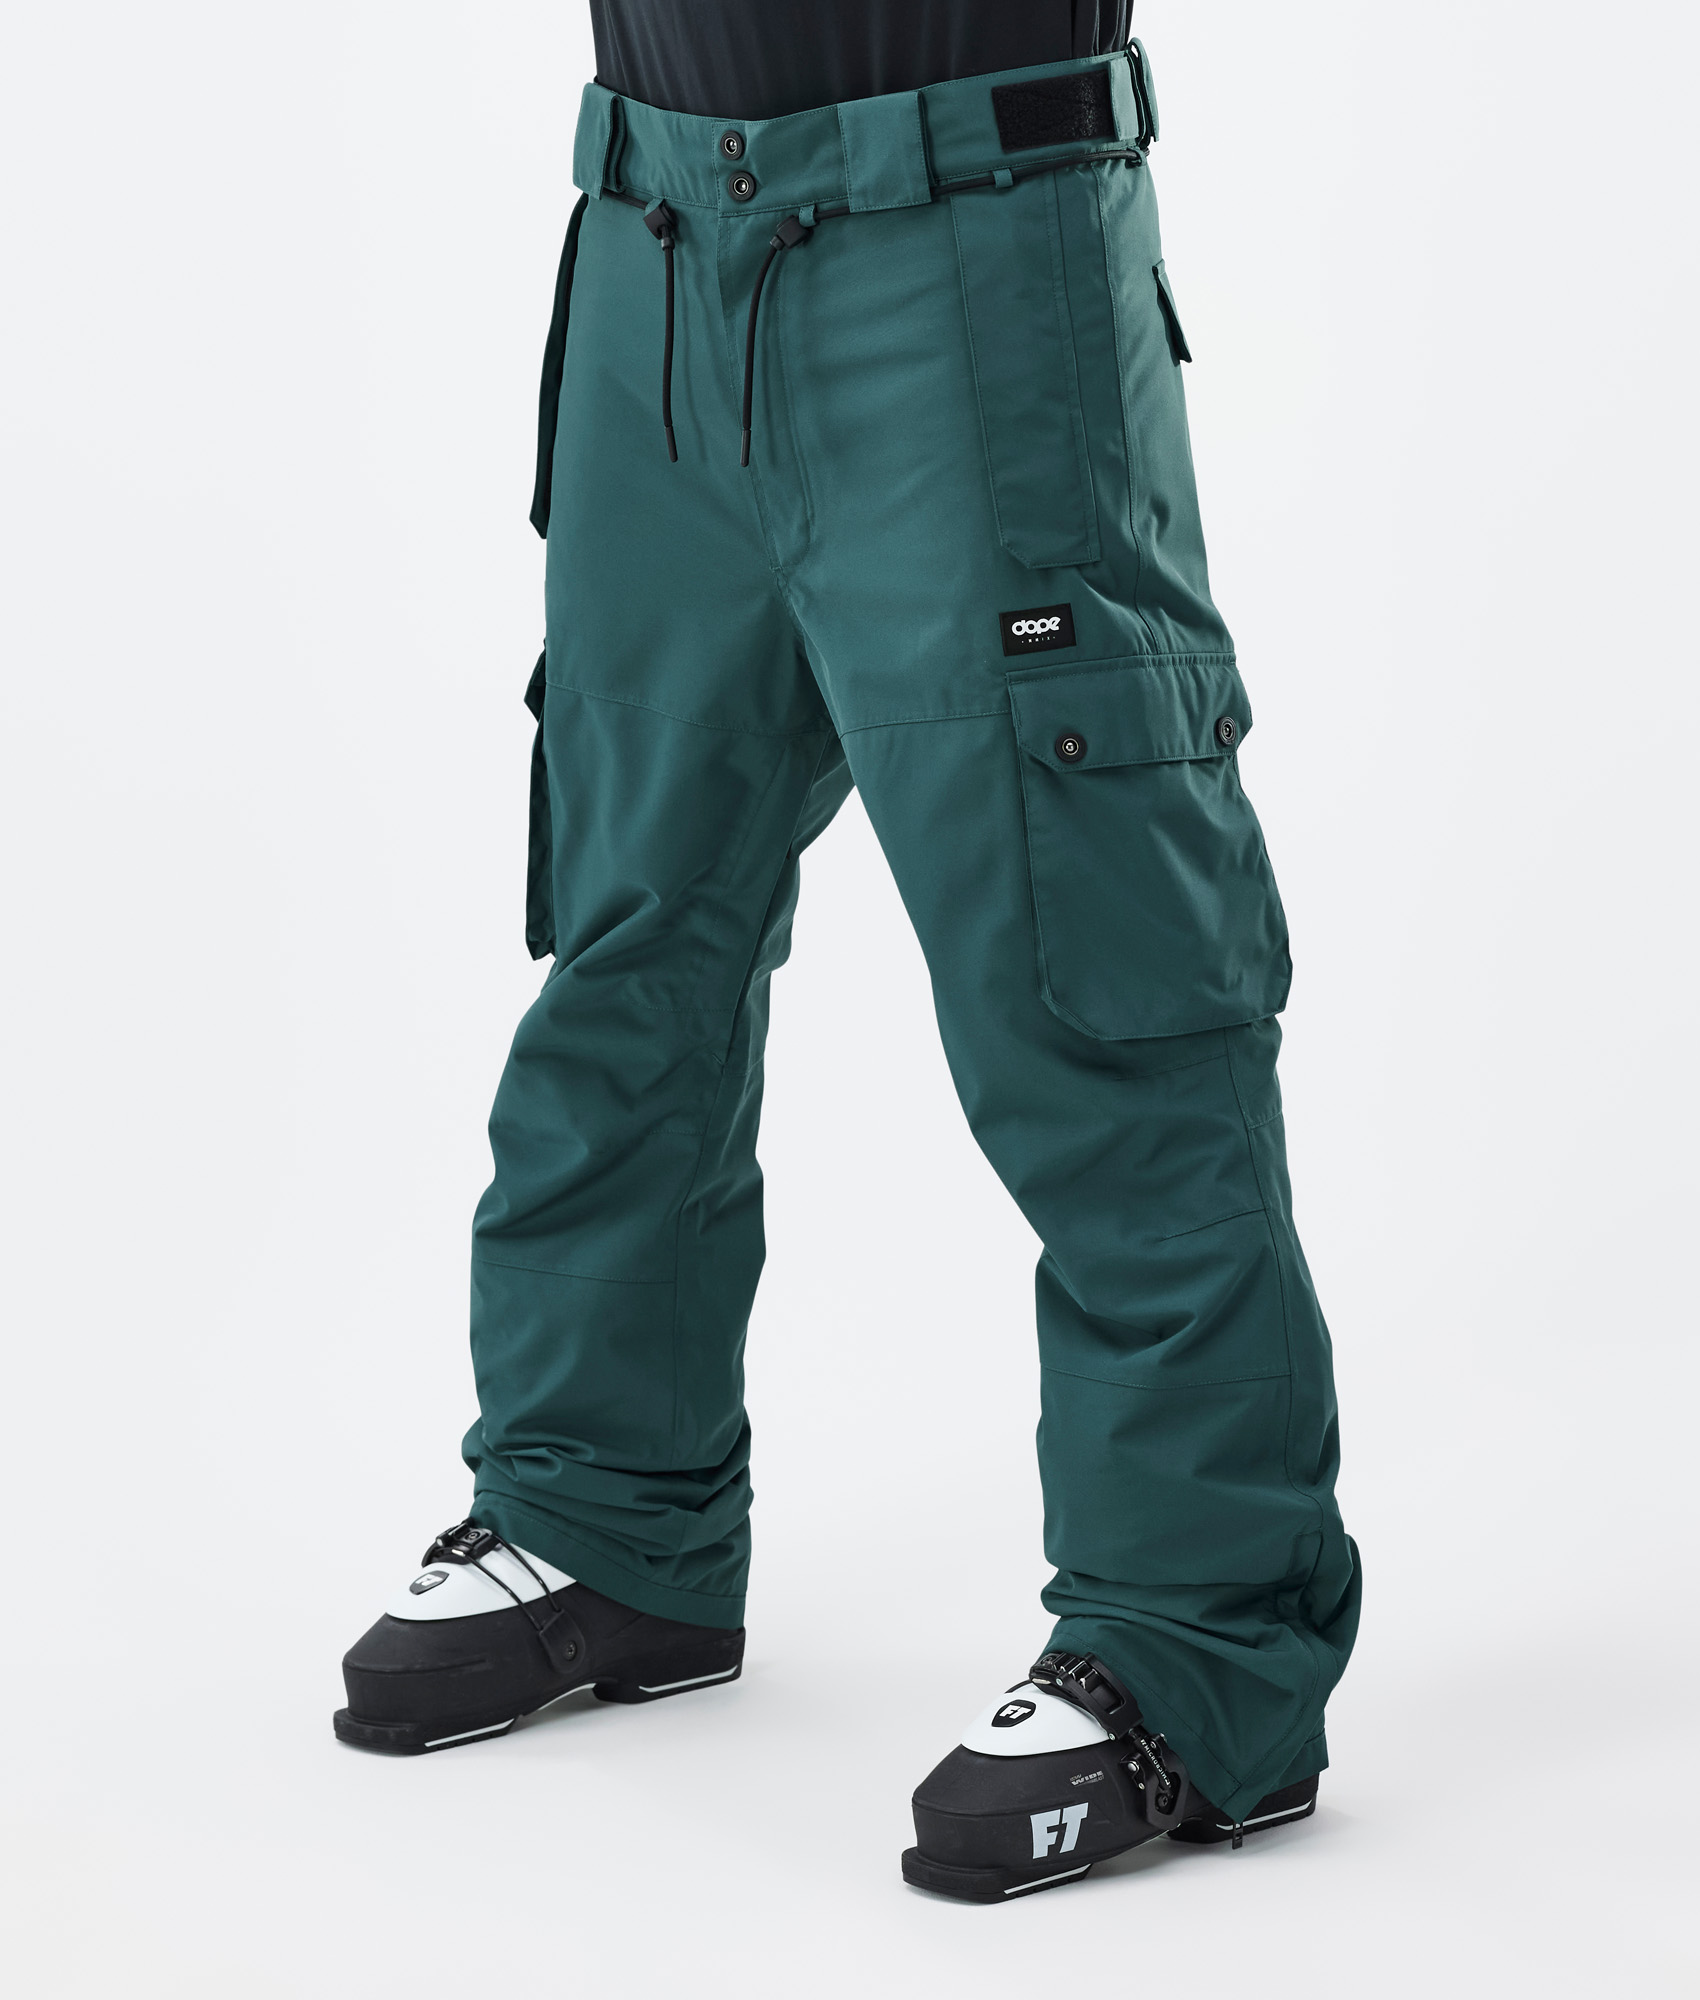 Dope Iconic Men's Ski Pants Olive Green